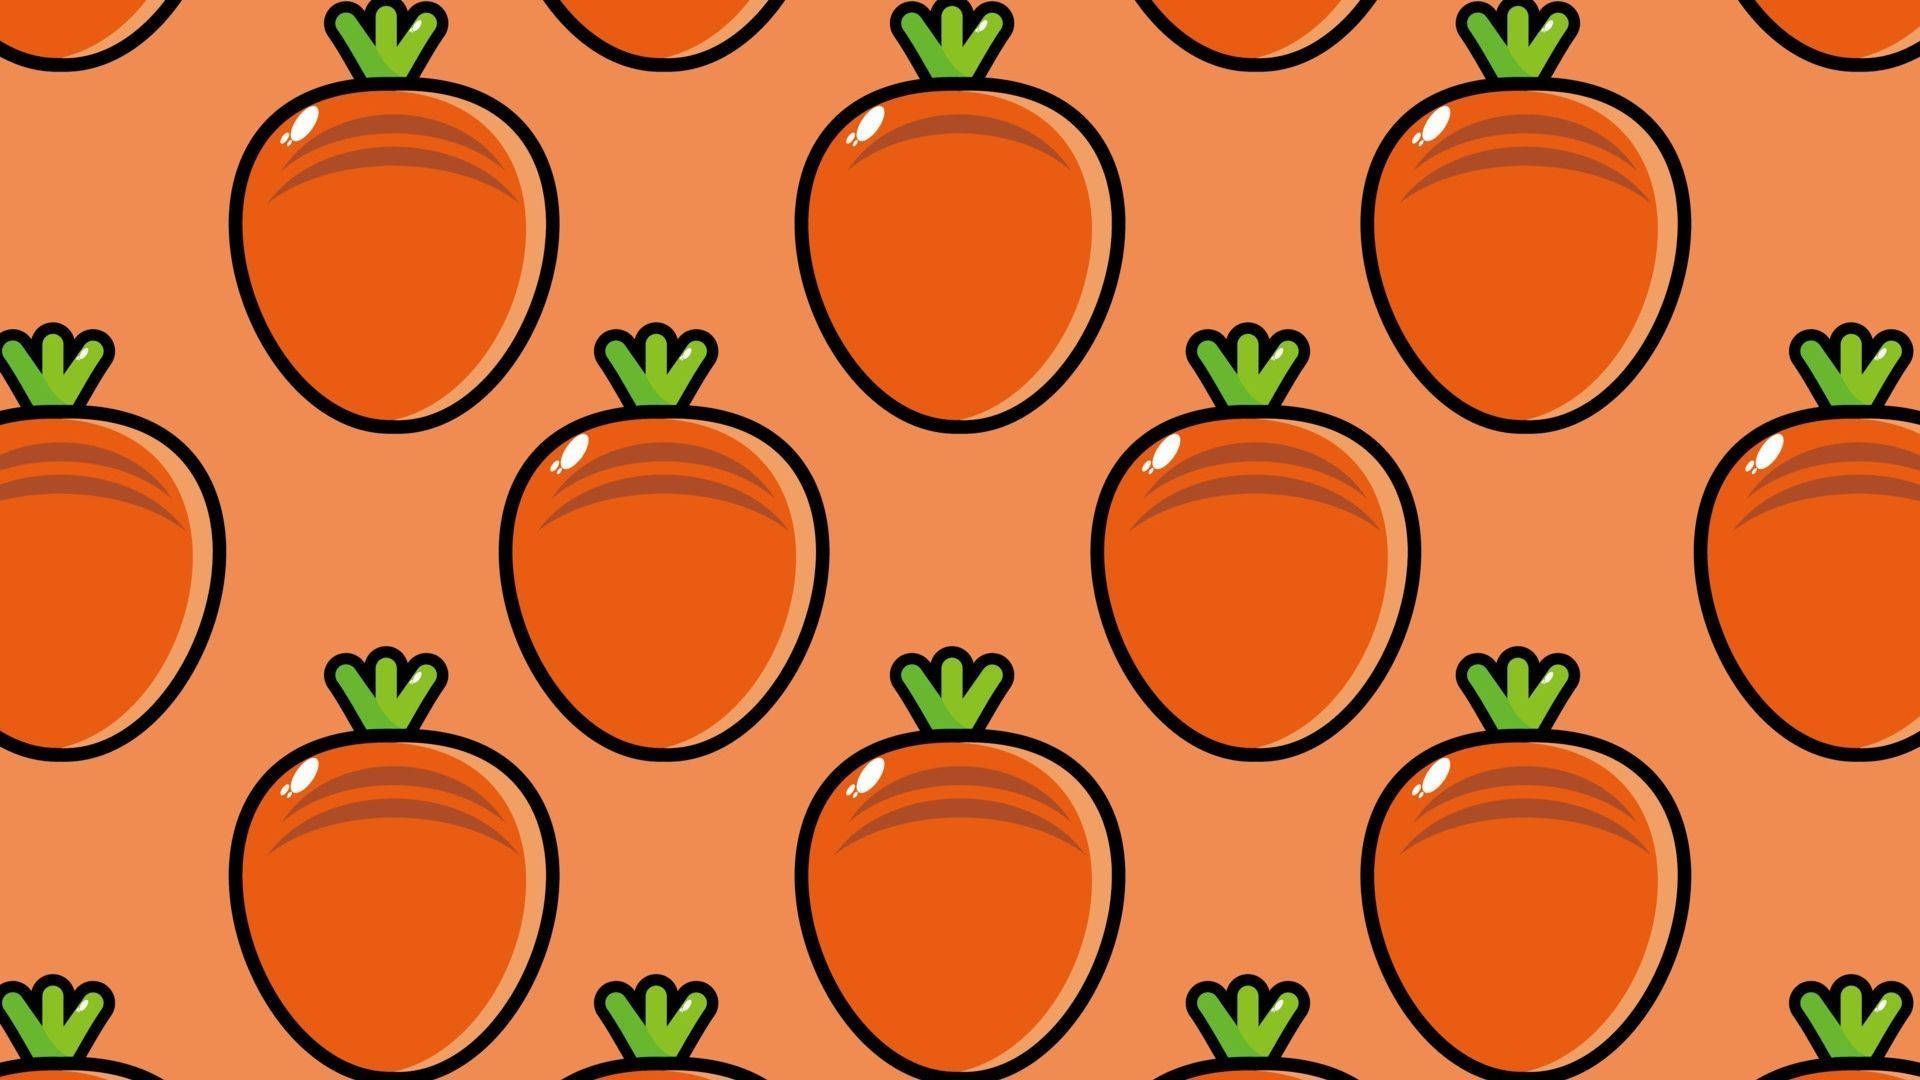 A pattern of illustrated carrots on an orange background - Pastel orange